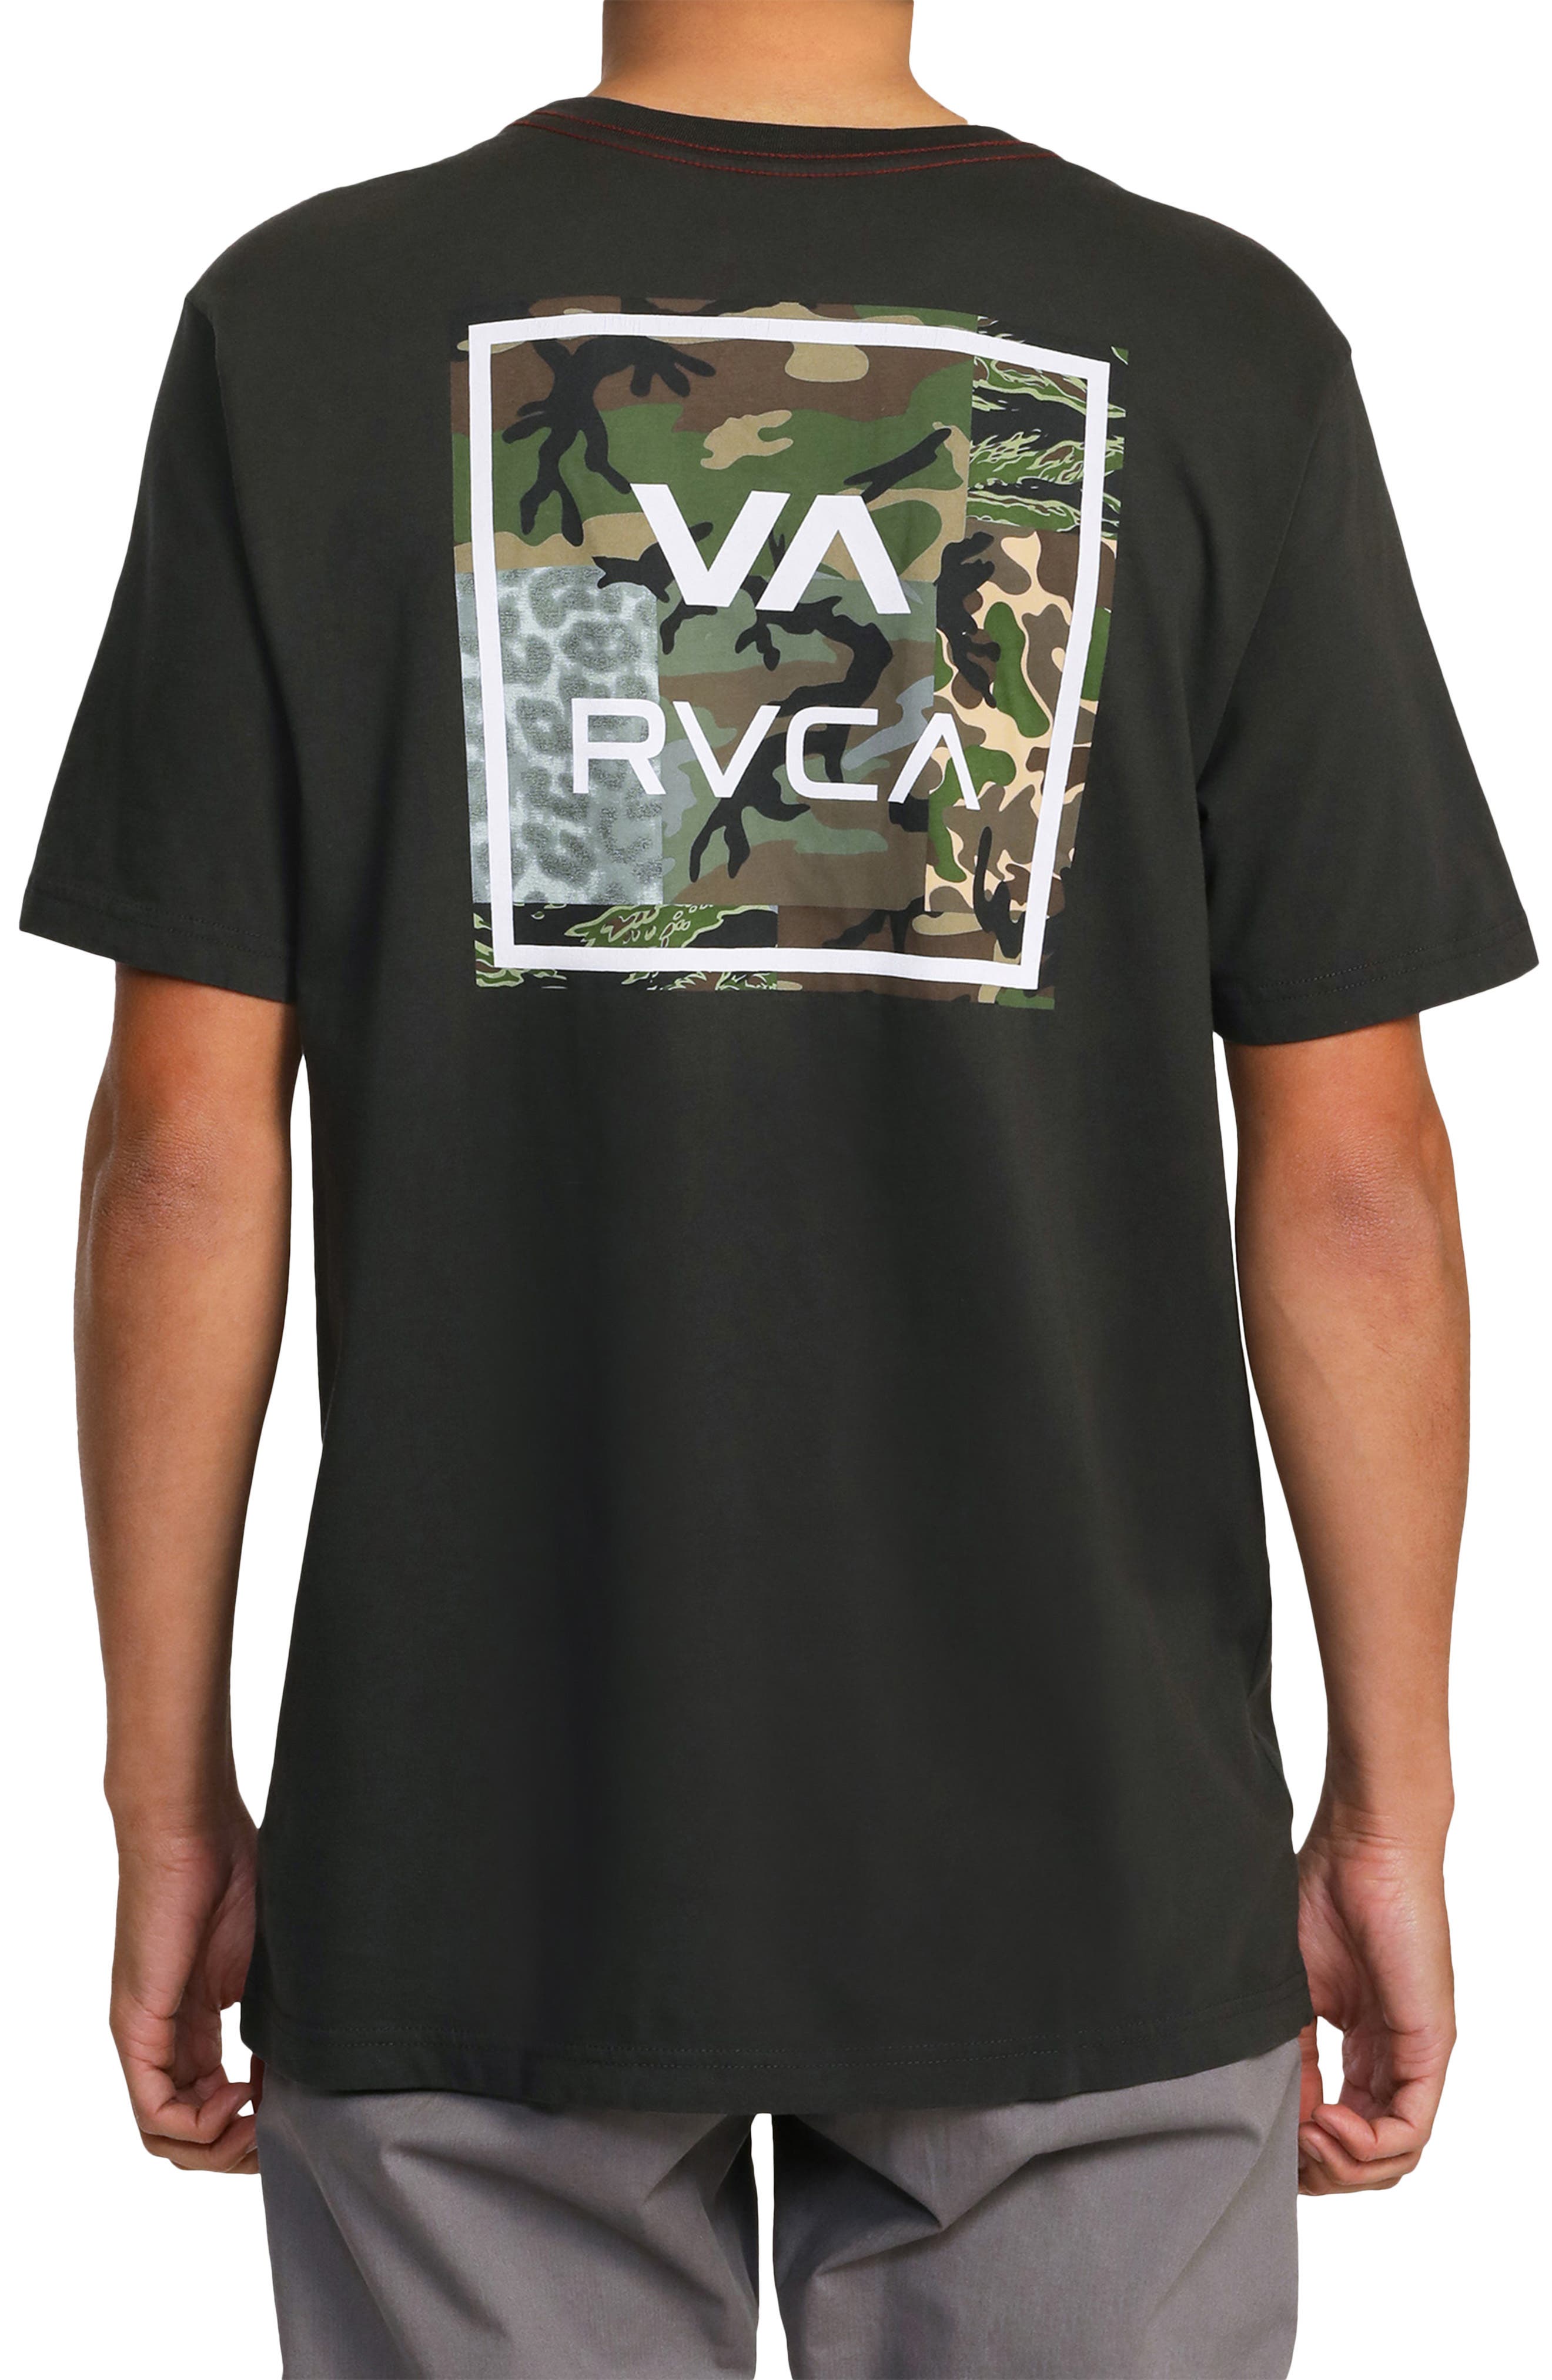 RVCA Va All The Ways T-shirt (black)